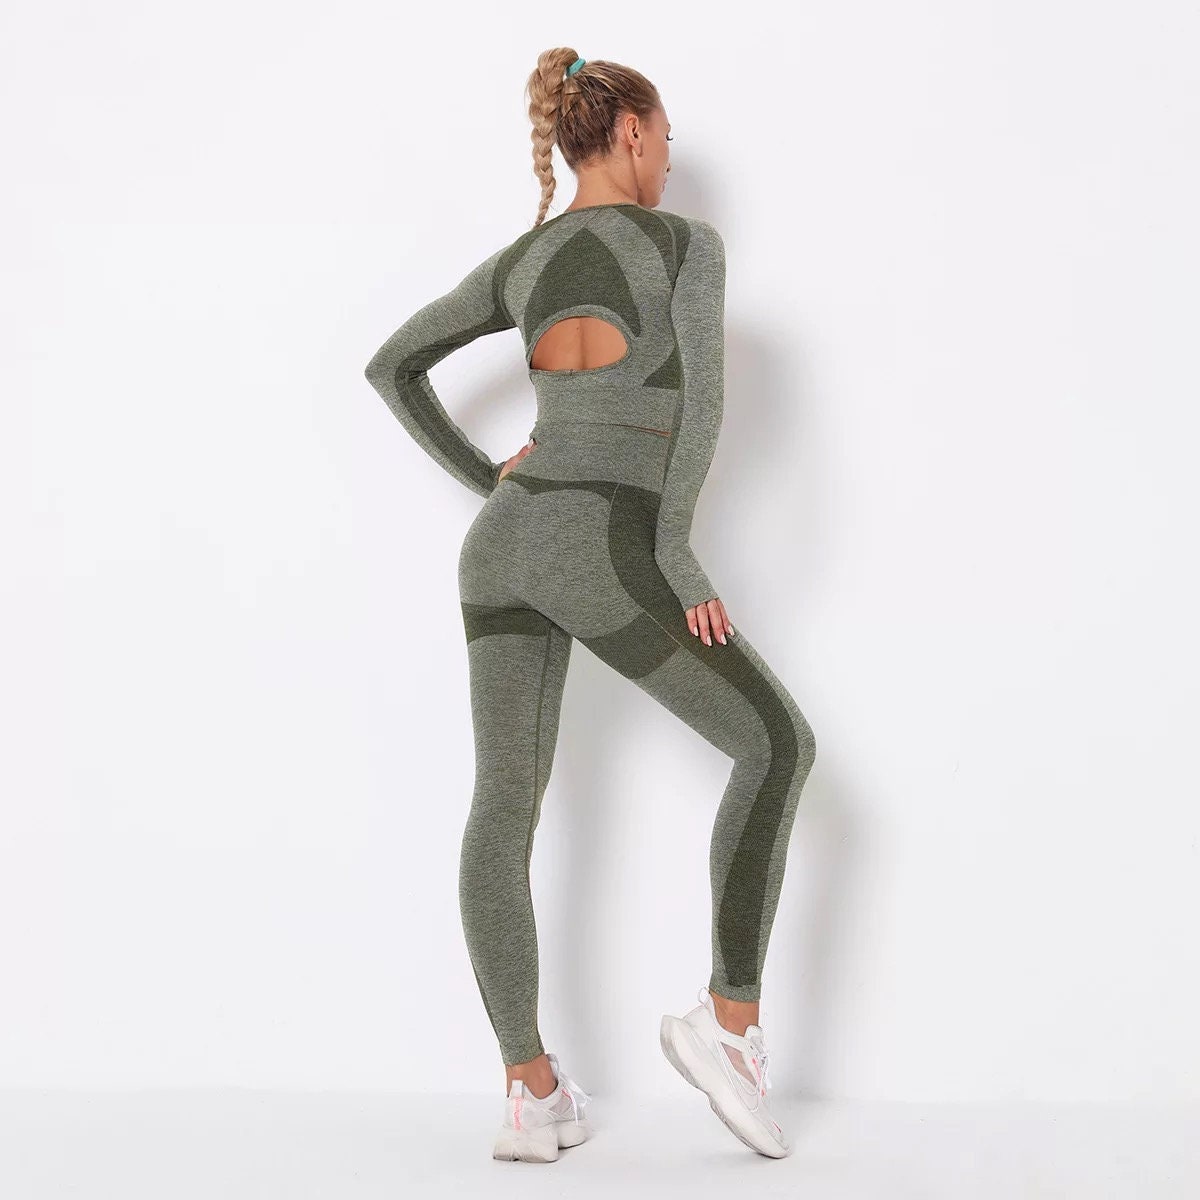 Laupuor Grace Studio-Tentacles Leggings for Women Tummy Control Stretch Workout Butt Lift-High Waist Yoga Pants for Women. 